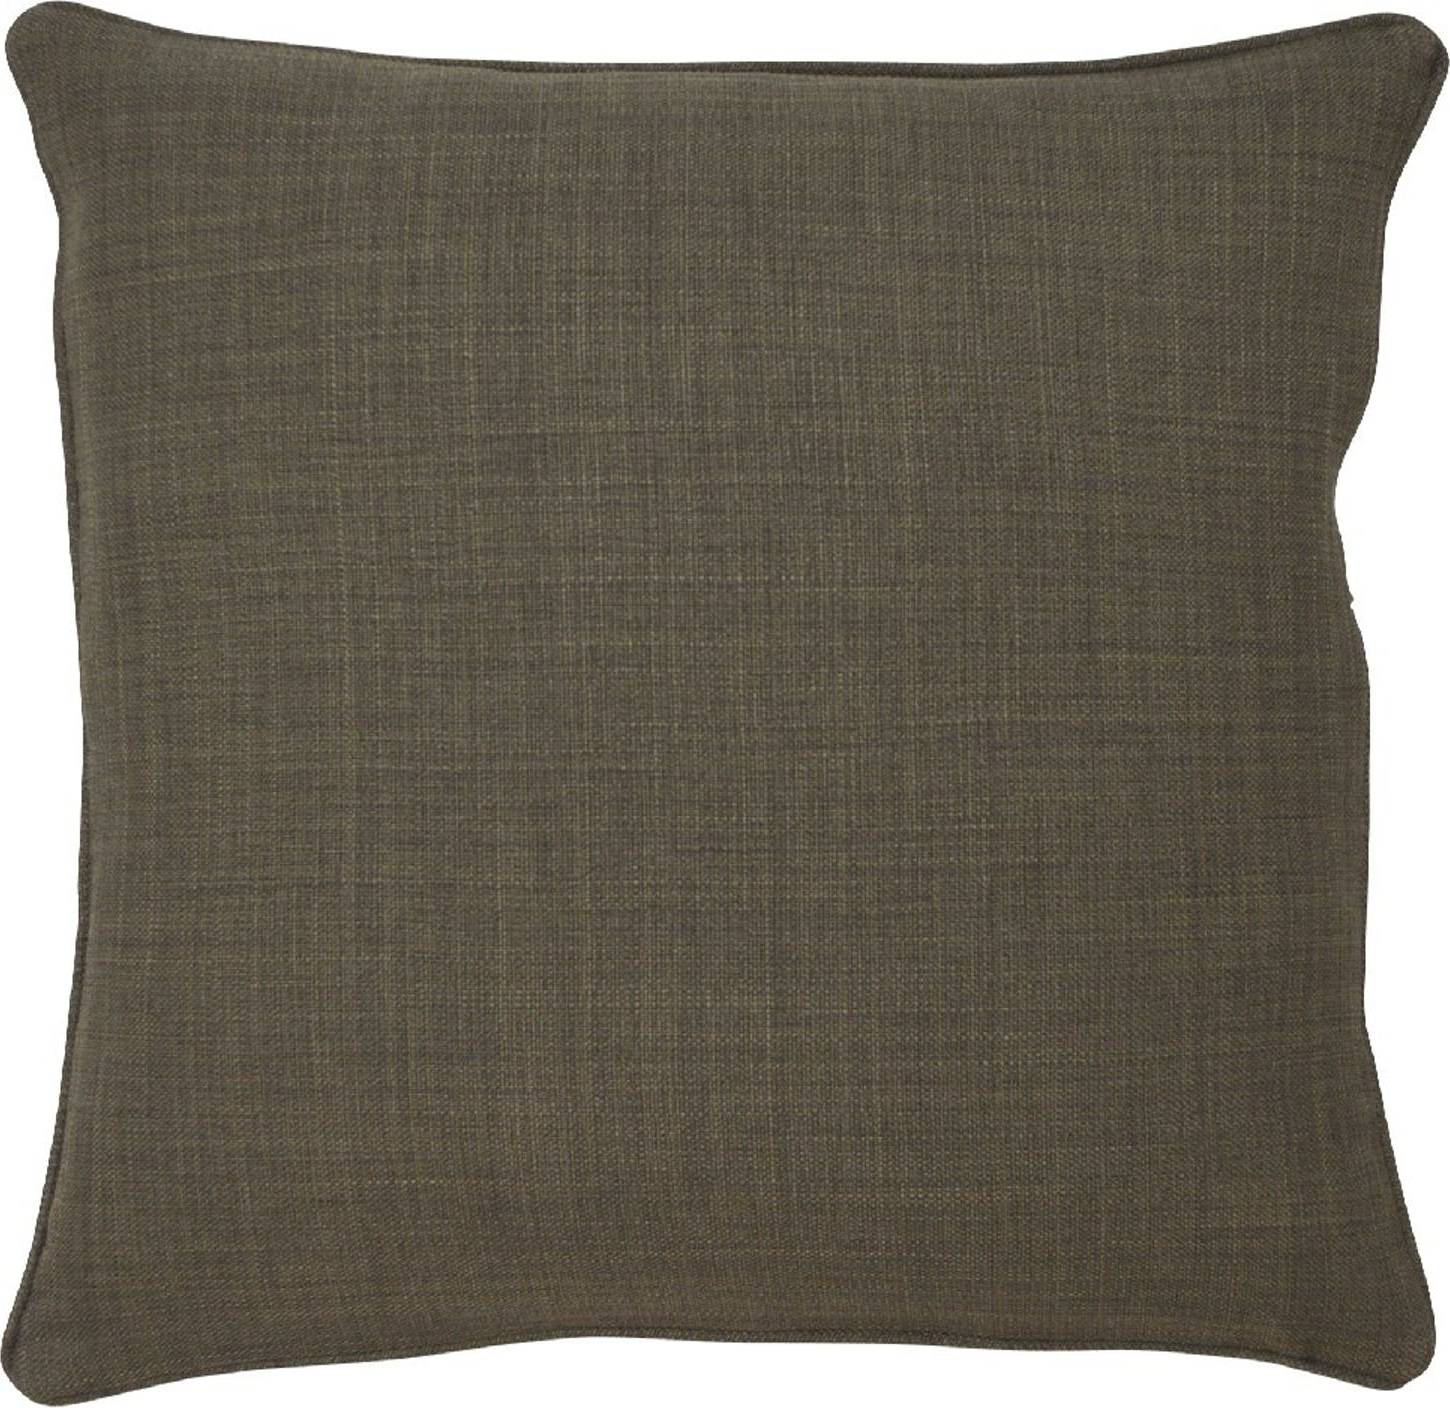  Bild på Arvidssons Textil Spektra Kuddöverdrag Grön (45x45cm) prydnadskudde